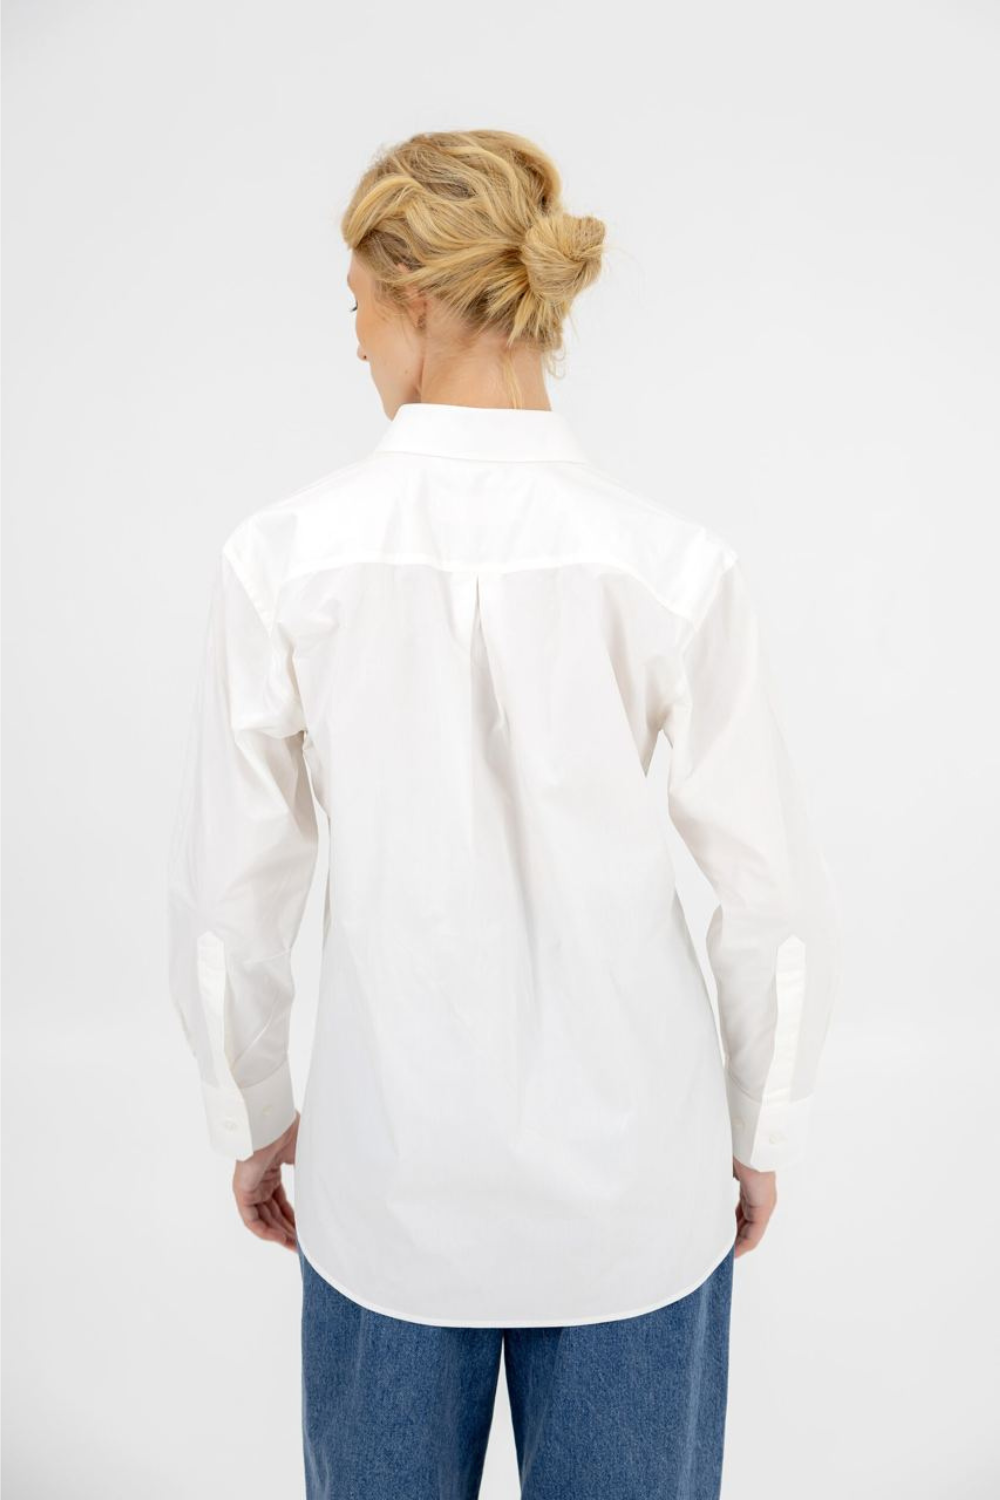 Shirt in milk color (LadyDi)